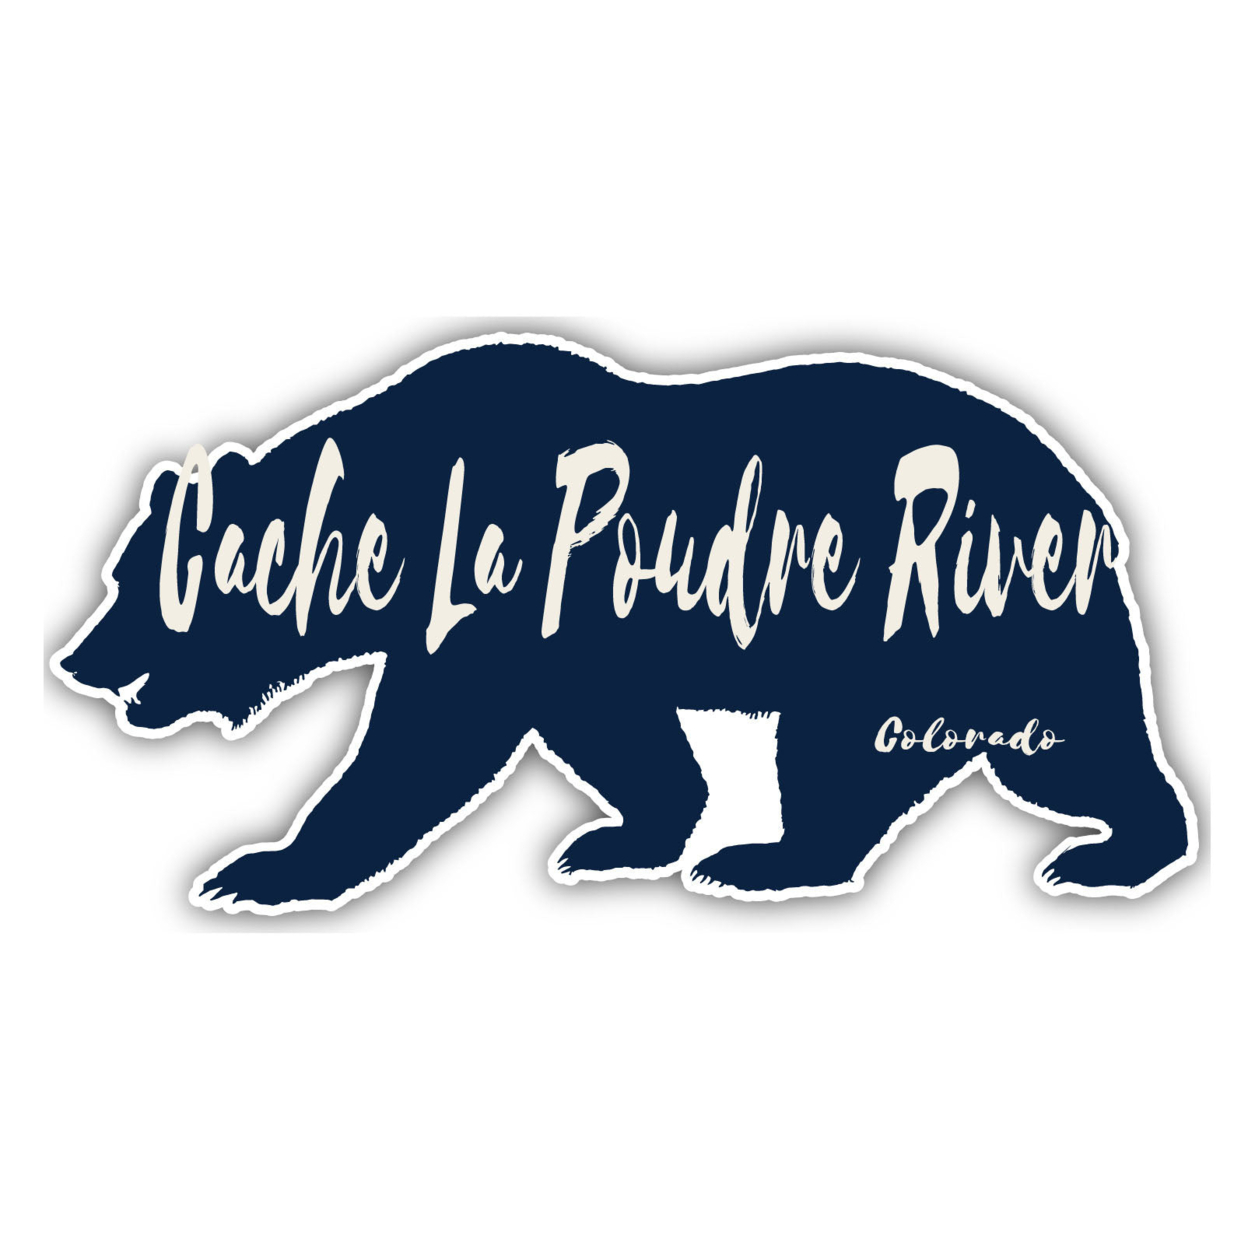 Cache La Poudre River Colorado Souvenir Decorative Stickers (Choose Theme And Size) - 4-Pack, 2-Inch, Tent